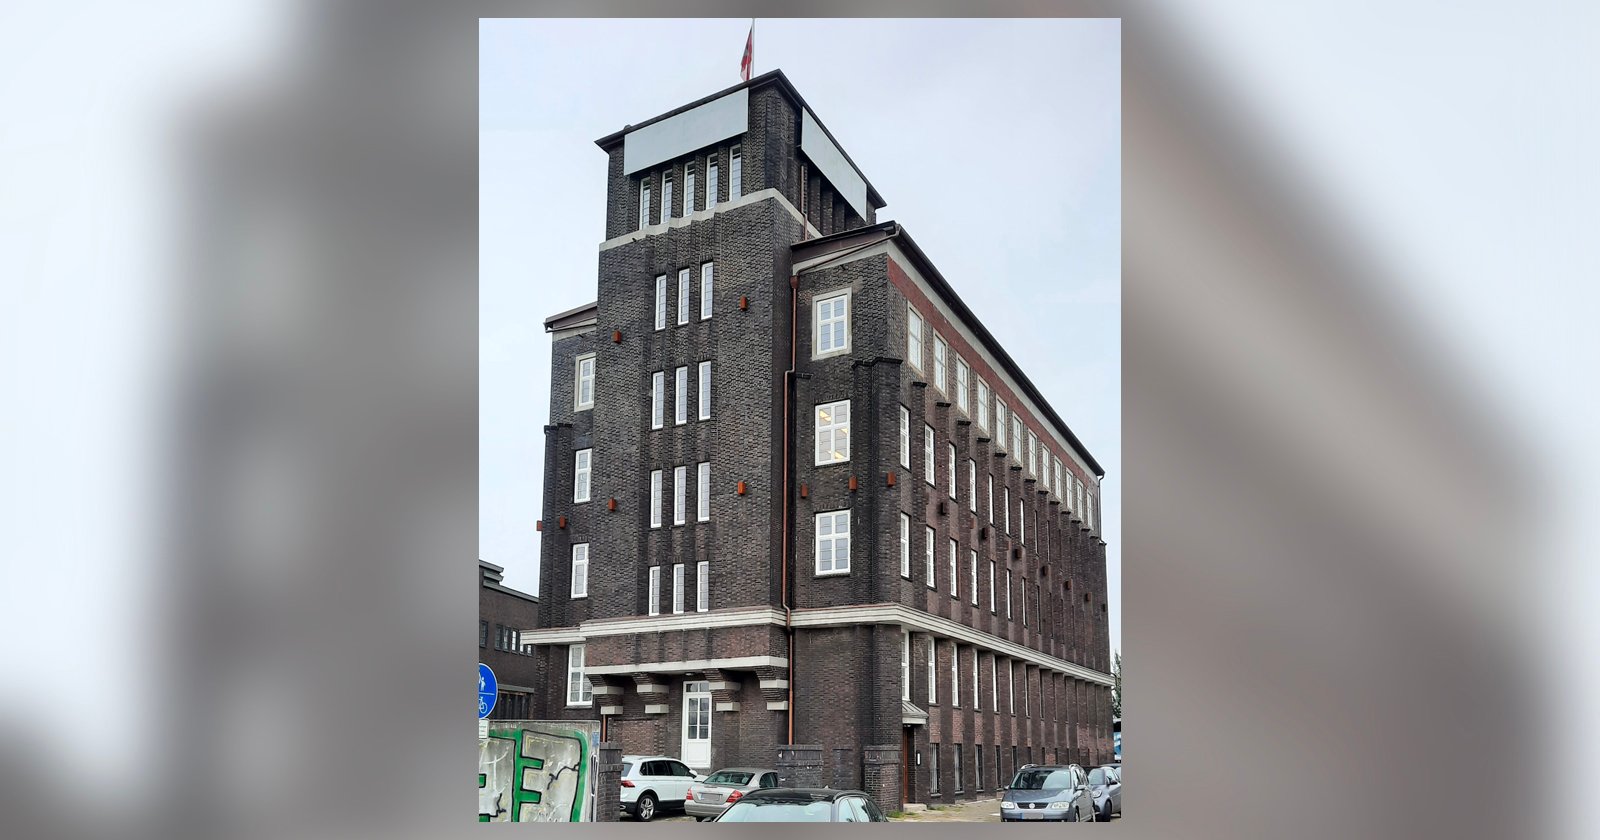 New factory in Germany for Meyer Optik Görlitz, front view